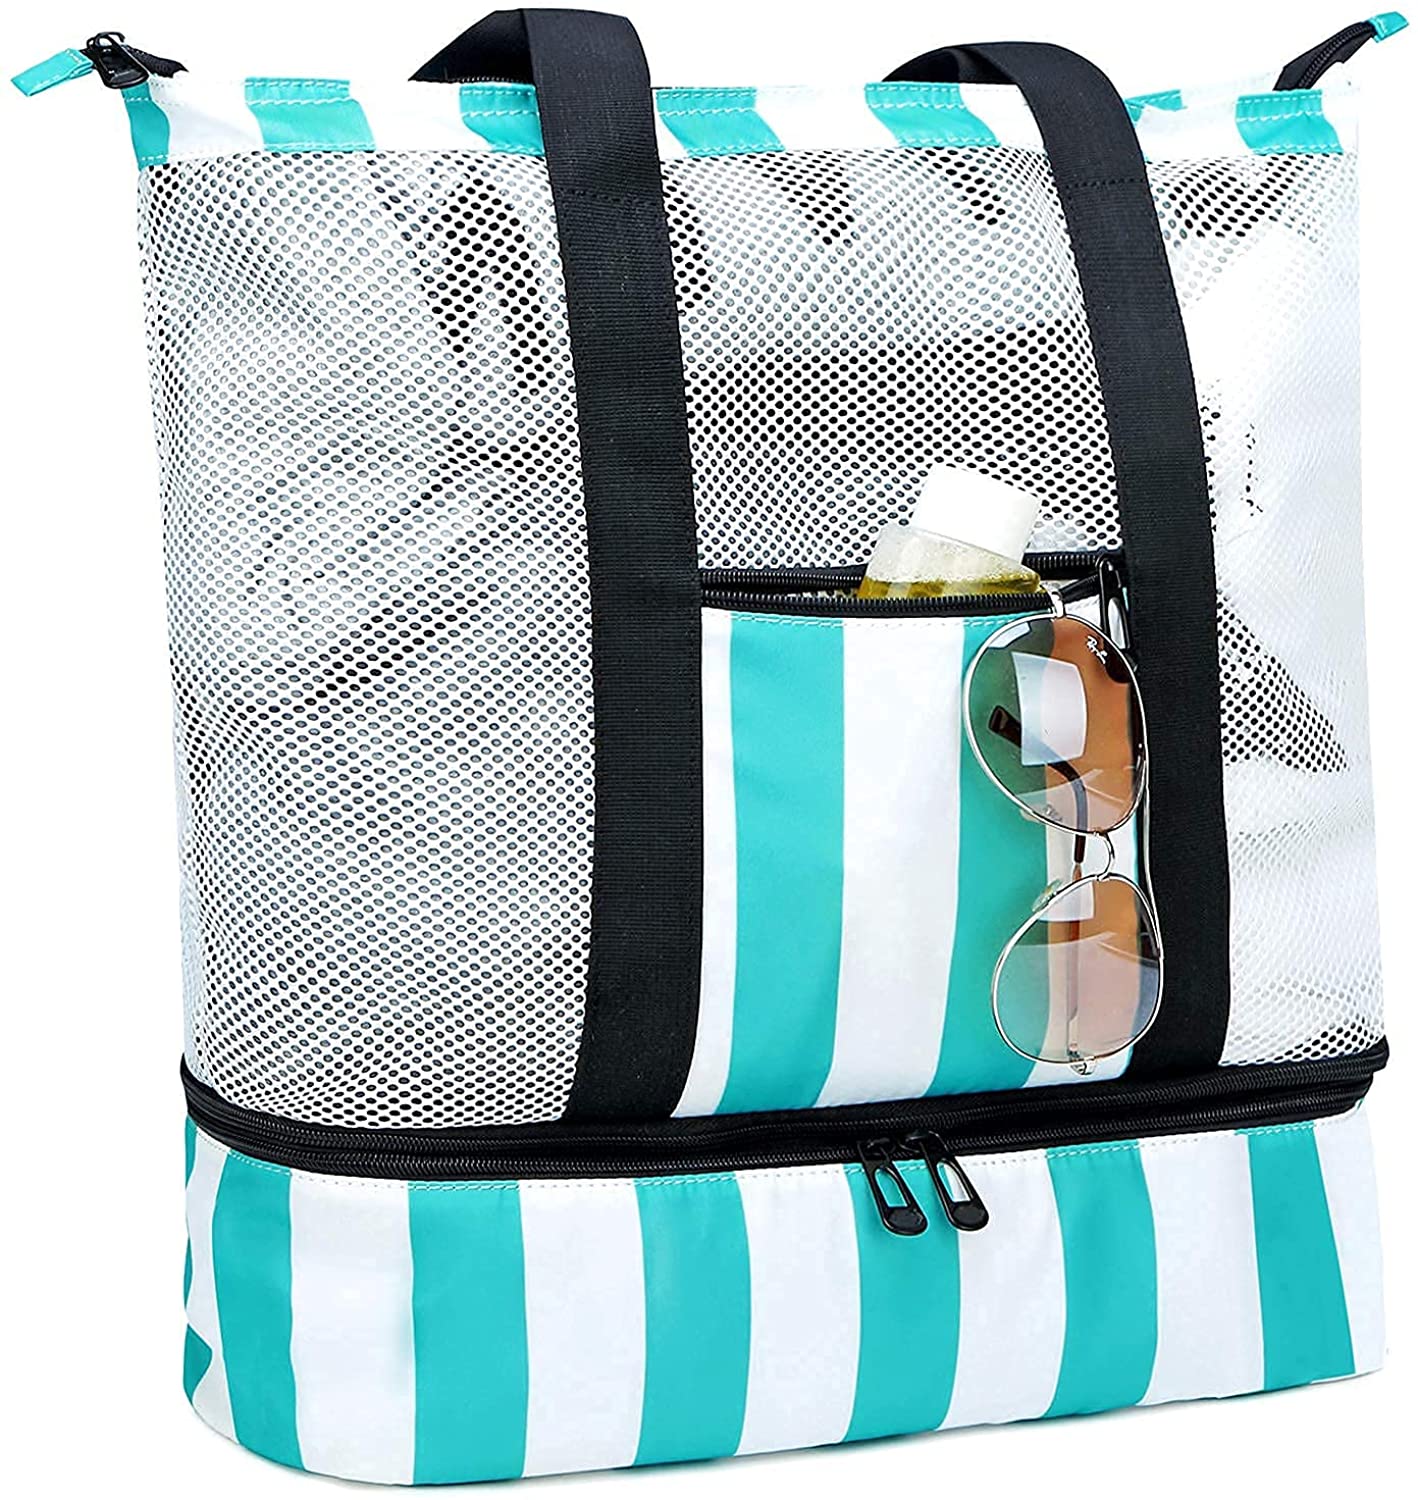 Details more than 70 best beach cooler bags super hot - in.duhocakina